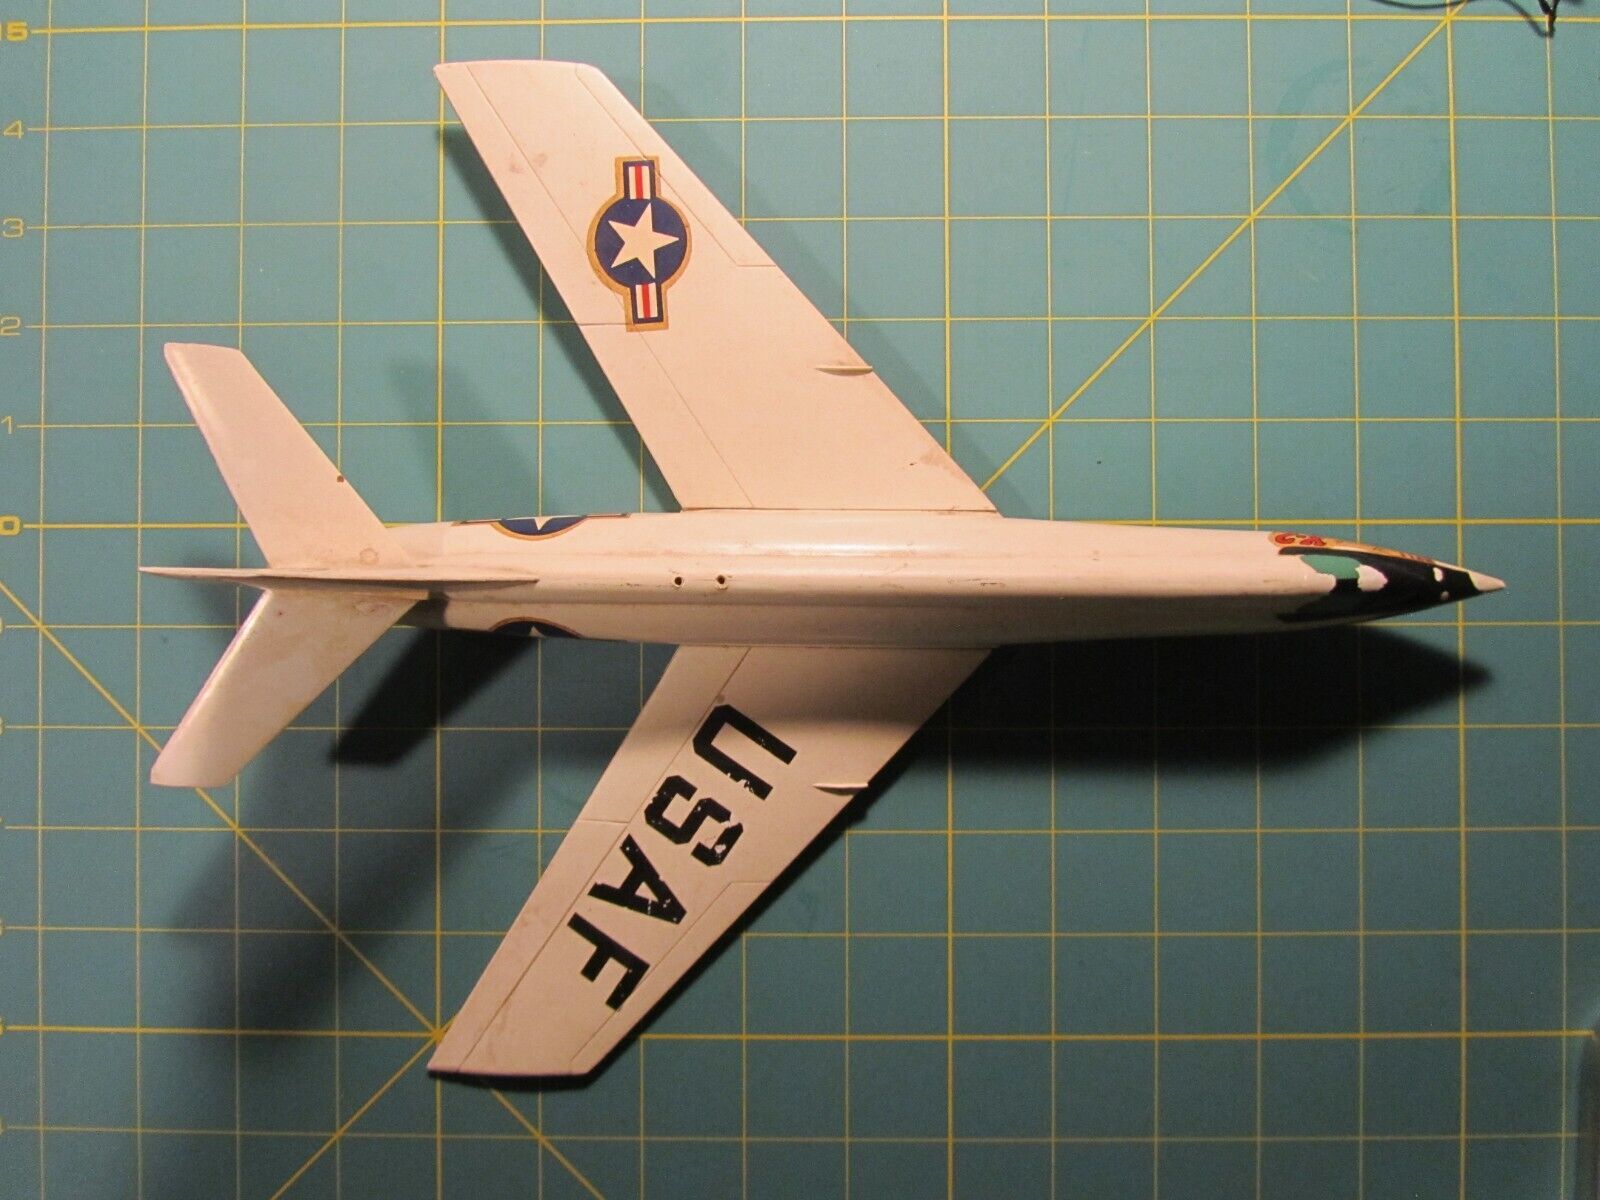 BELL AIRCRAFT X-2 USAF/NASA Rocket Plane Original Factory Issue